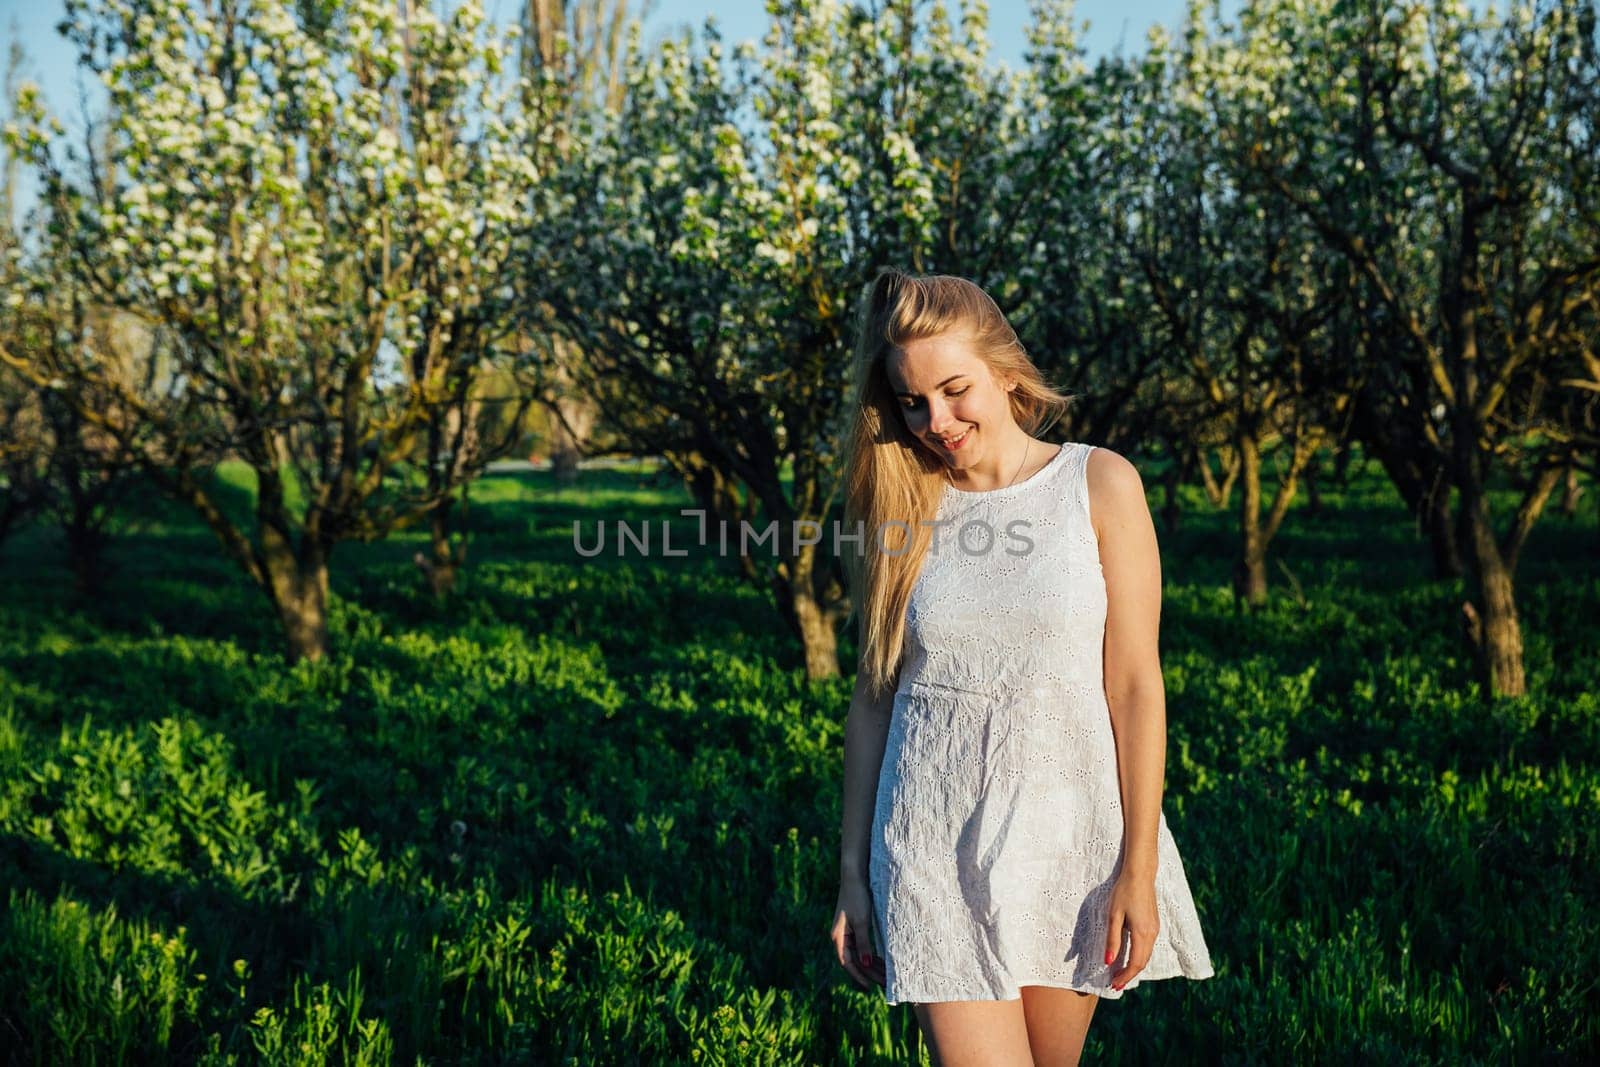 Beautiful blonde woman walking in blooming garden in spring by Simakov